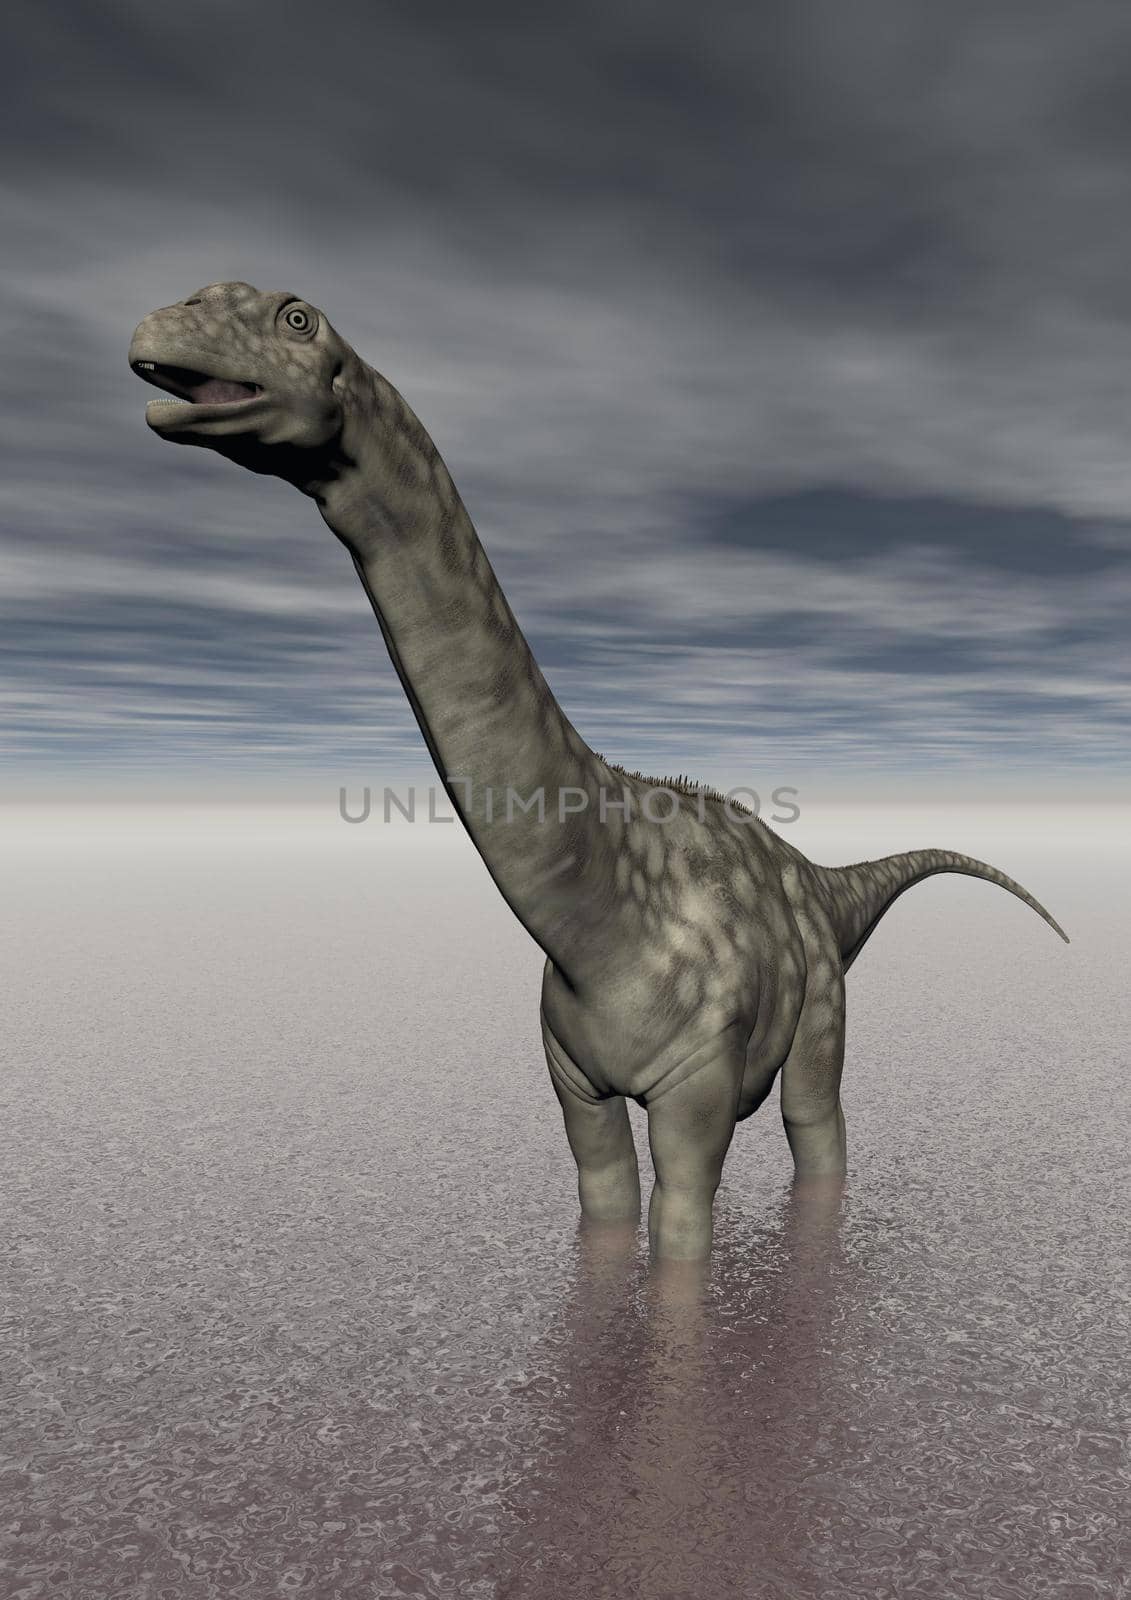 argentinosaurus dinosaur in a lake with a dark sky